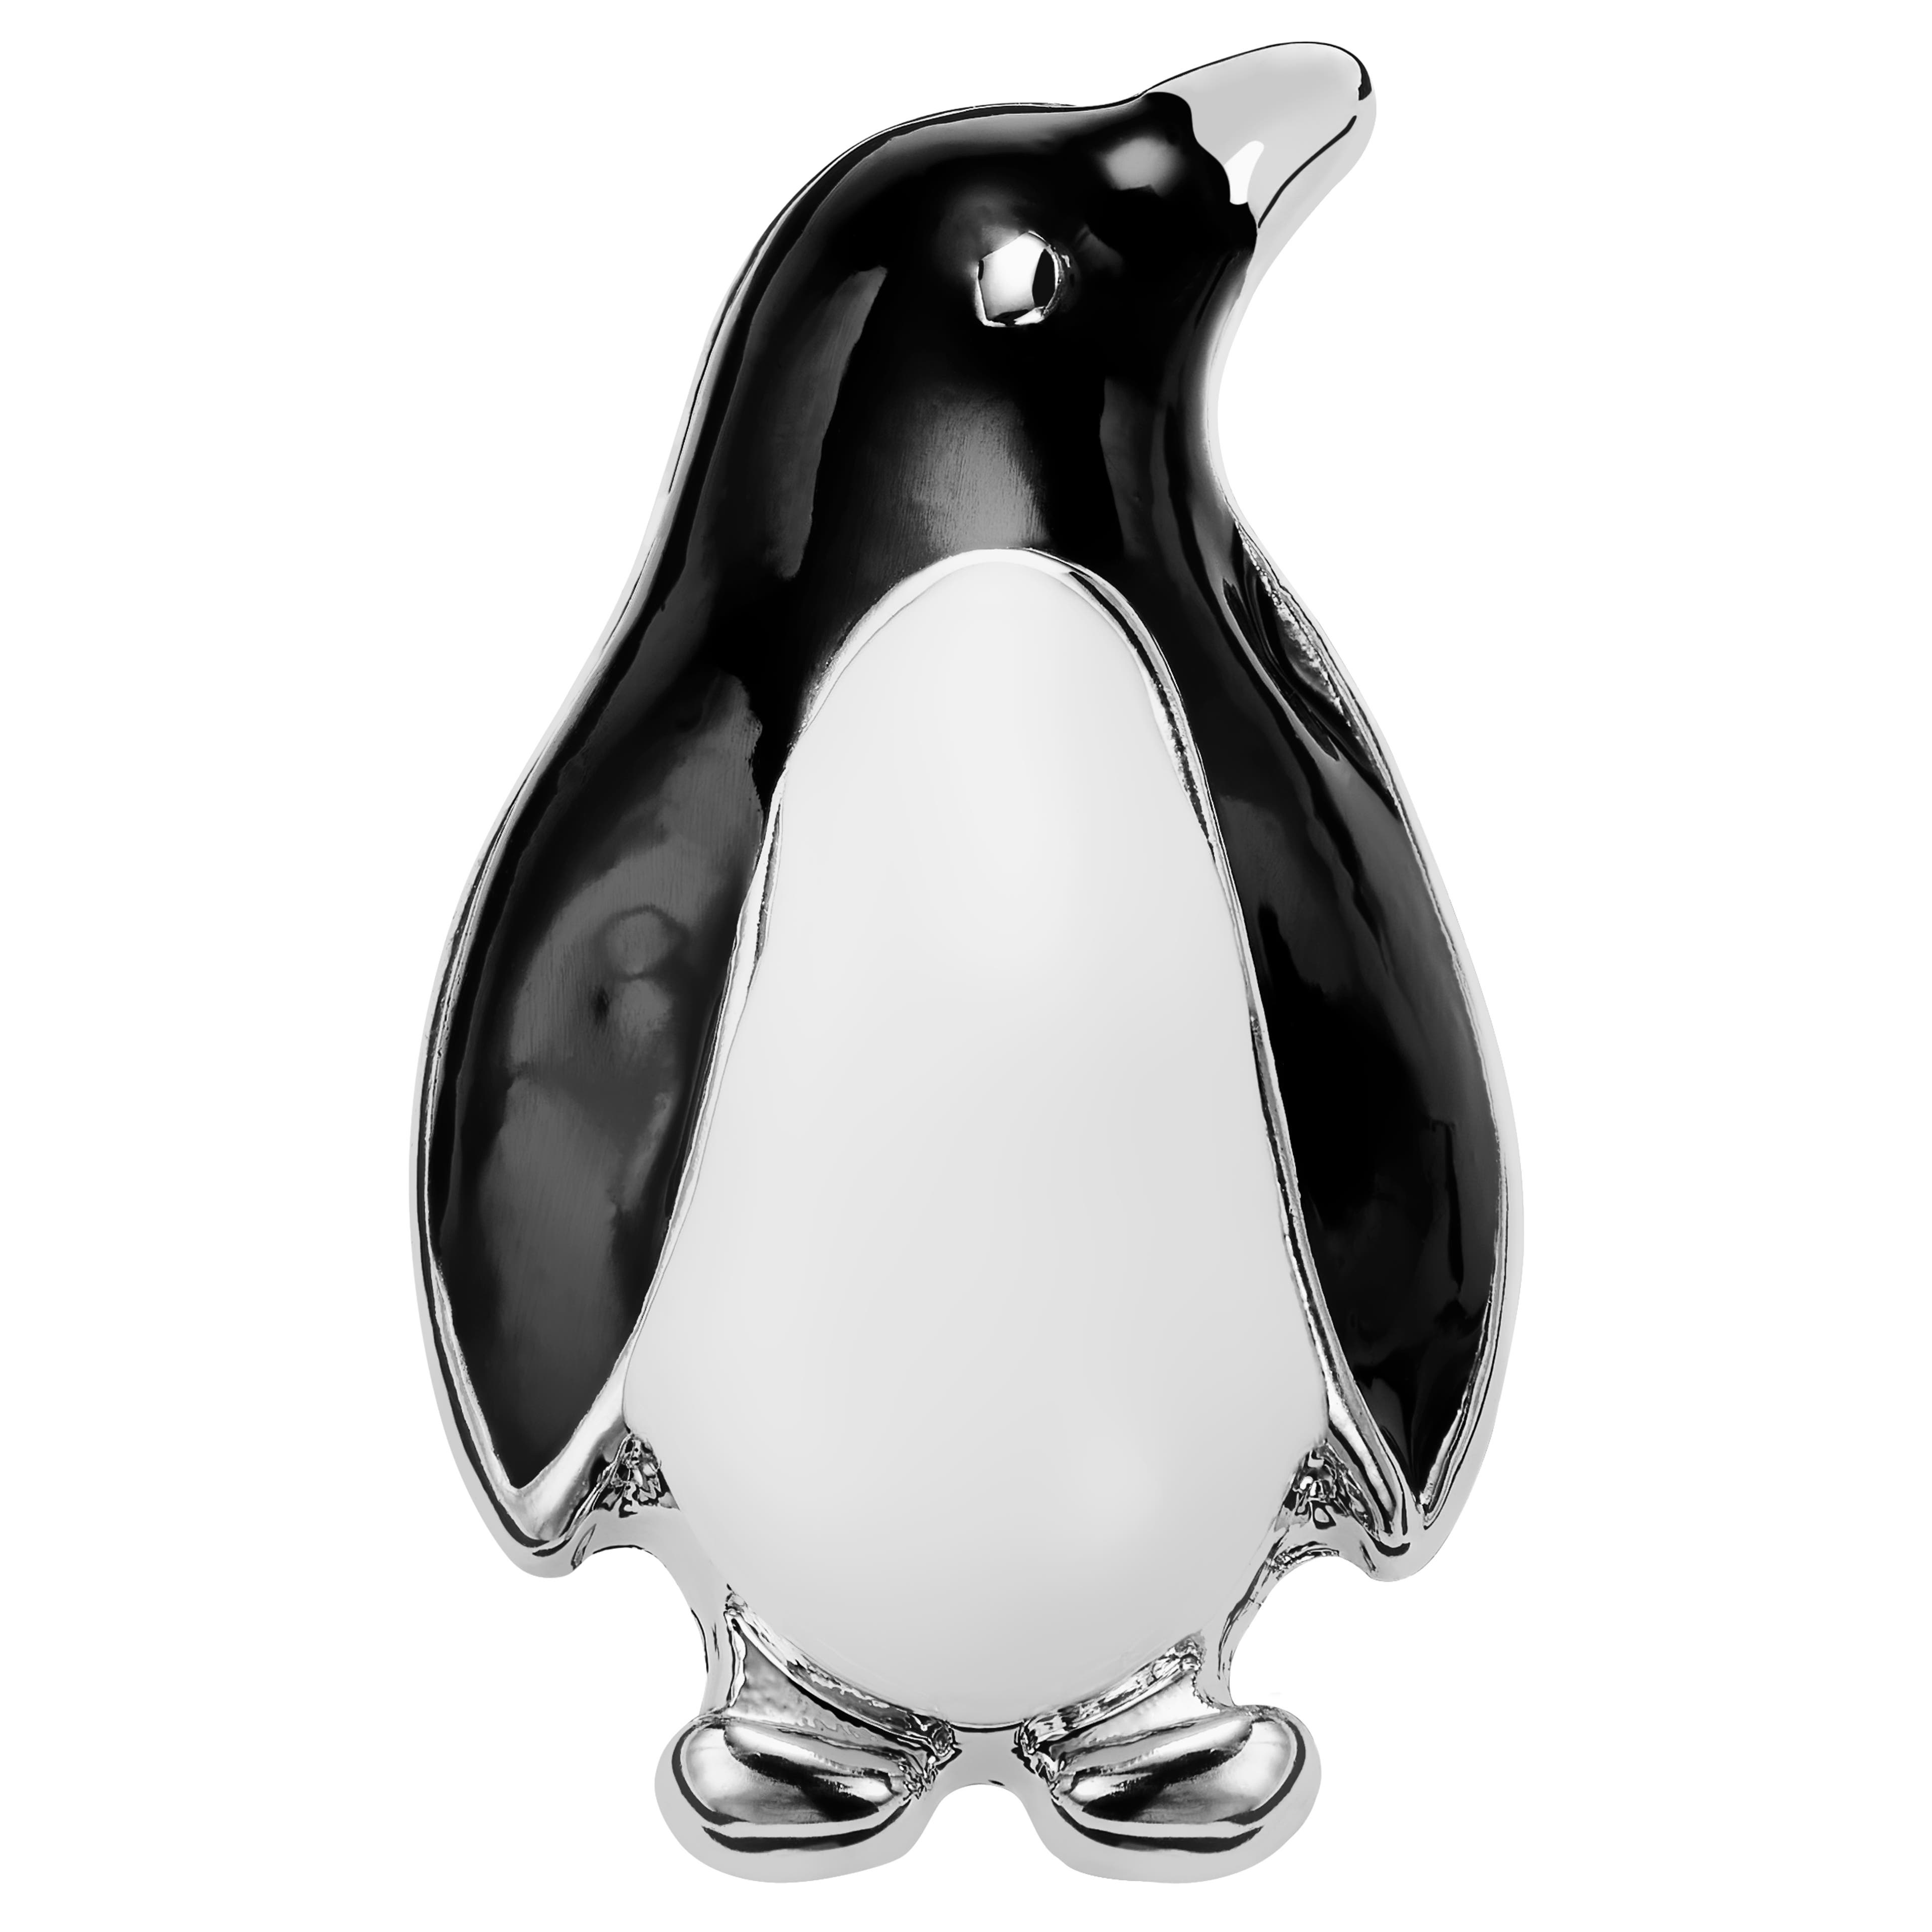 Zoikos | Alfiler de solapa de pingüino blanco y negro